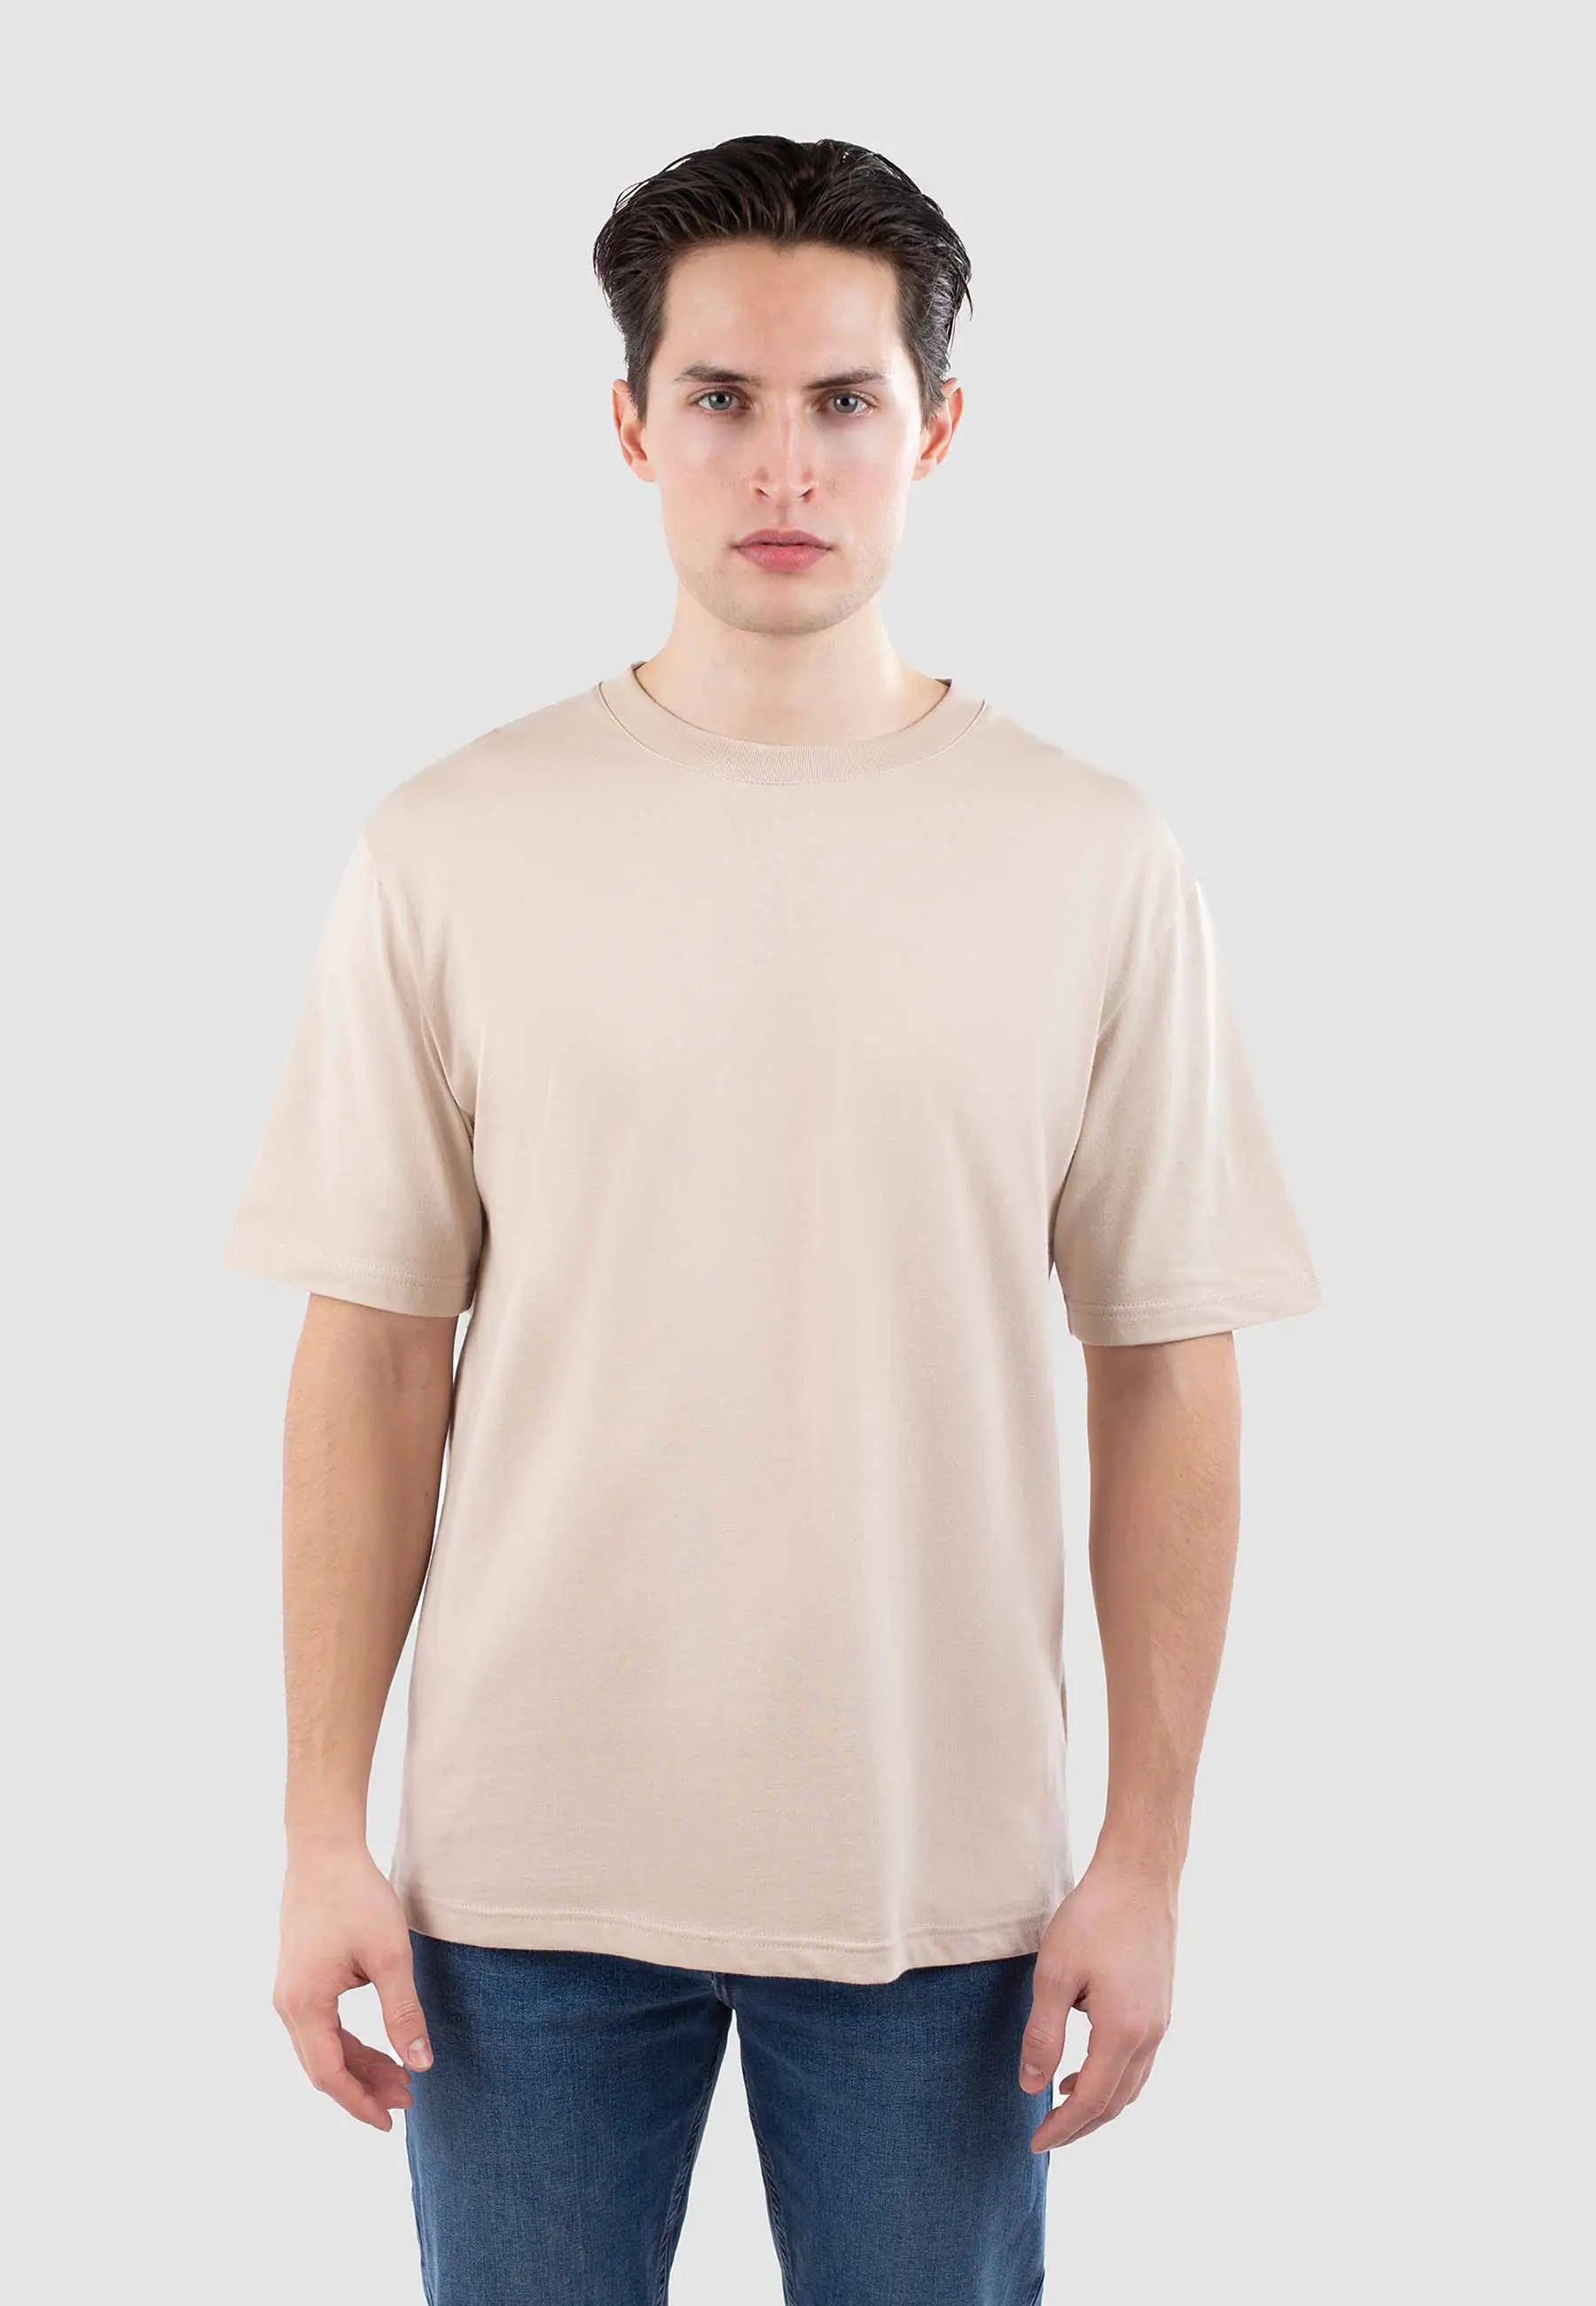 Mico high collar tshirt - Mojave beige